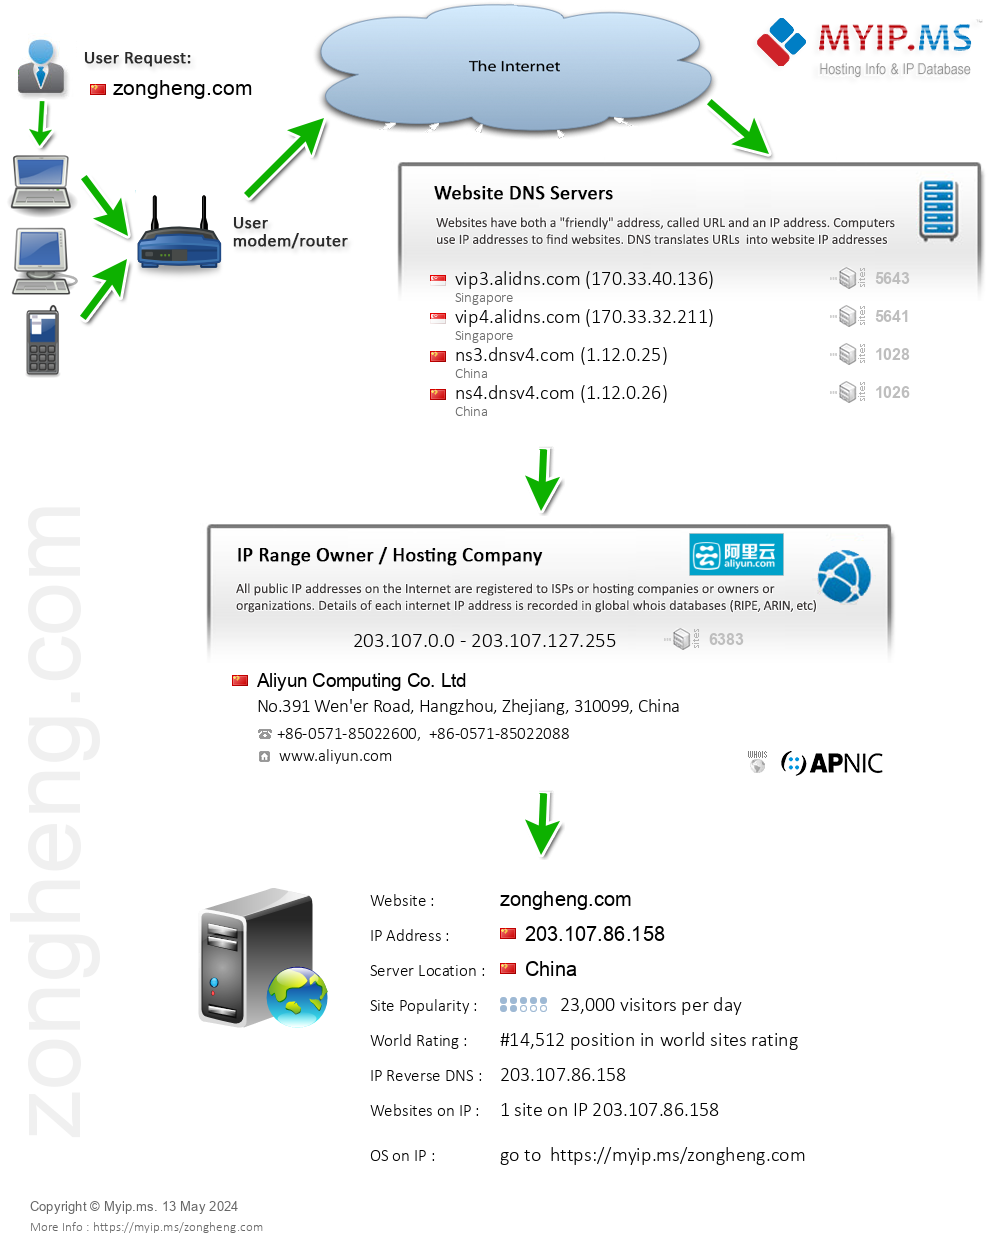 Zongheng.com - Website Hosting Visual IP Diagram